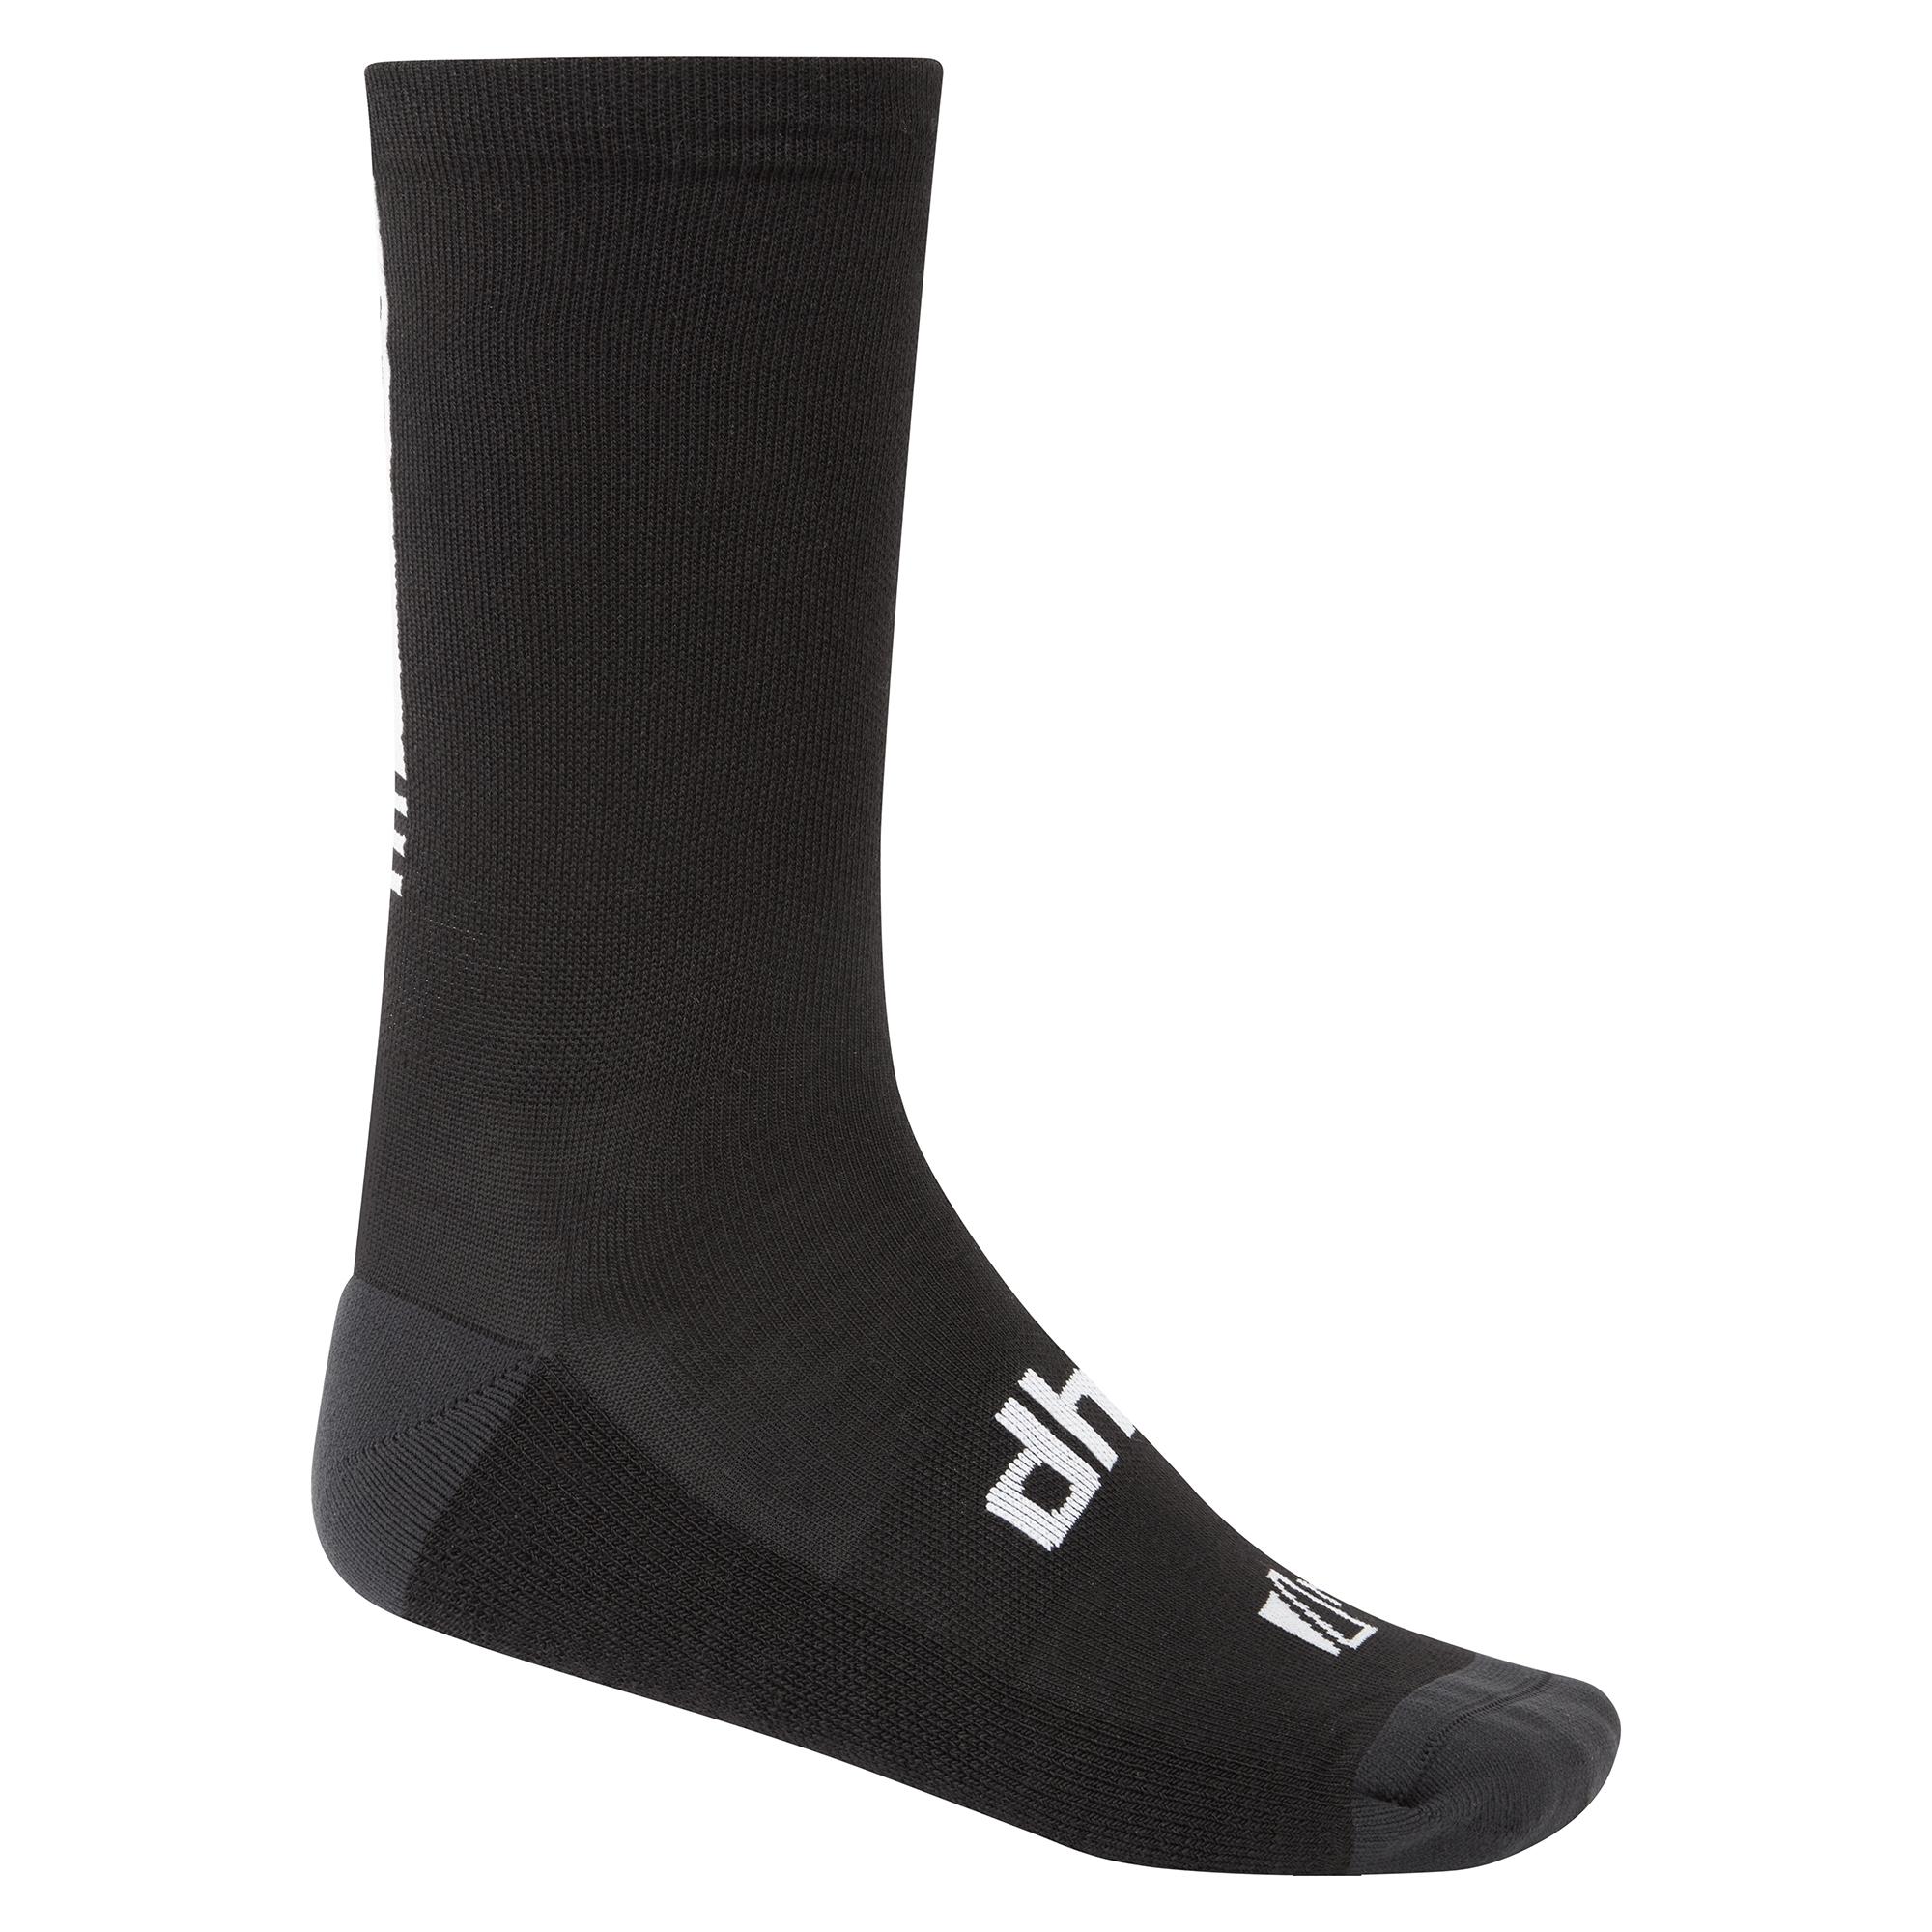 Dhb Aeron Merino Sock 2.0 - Black/white